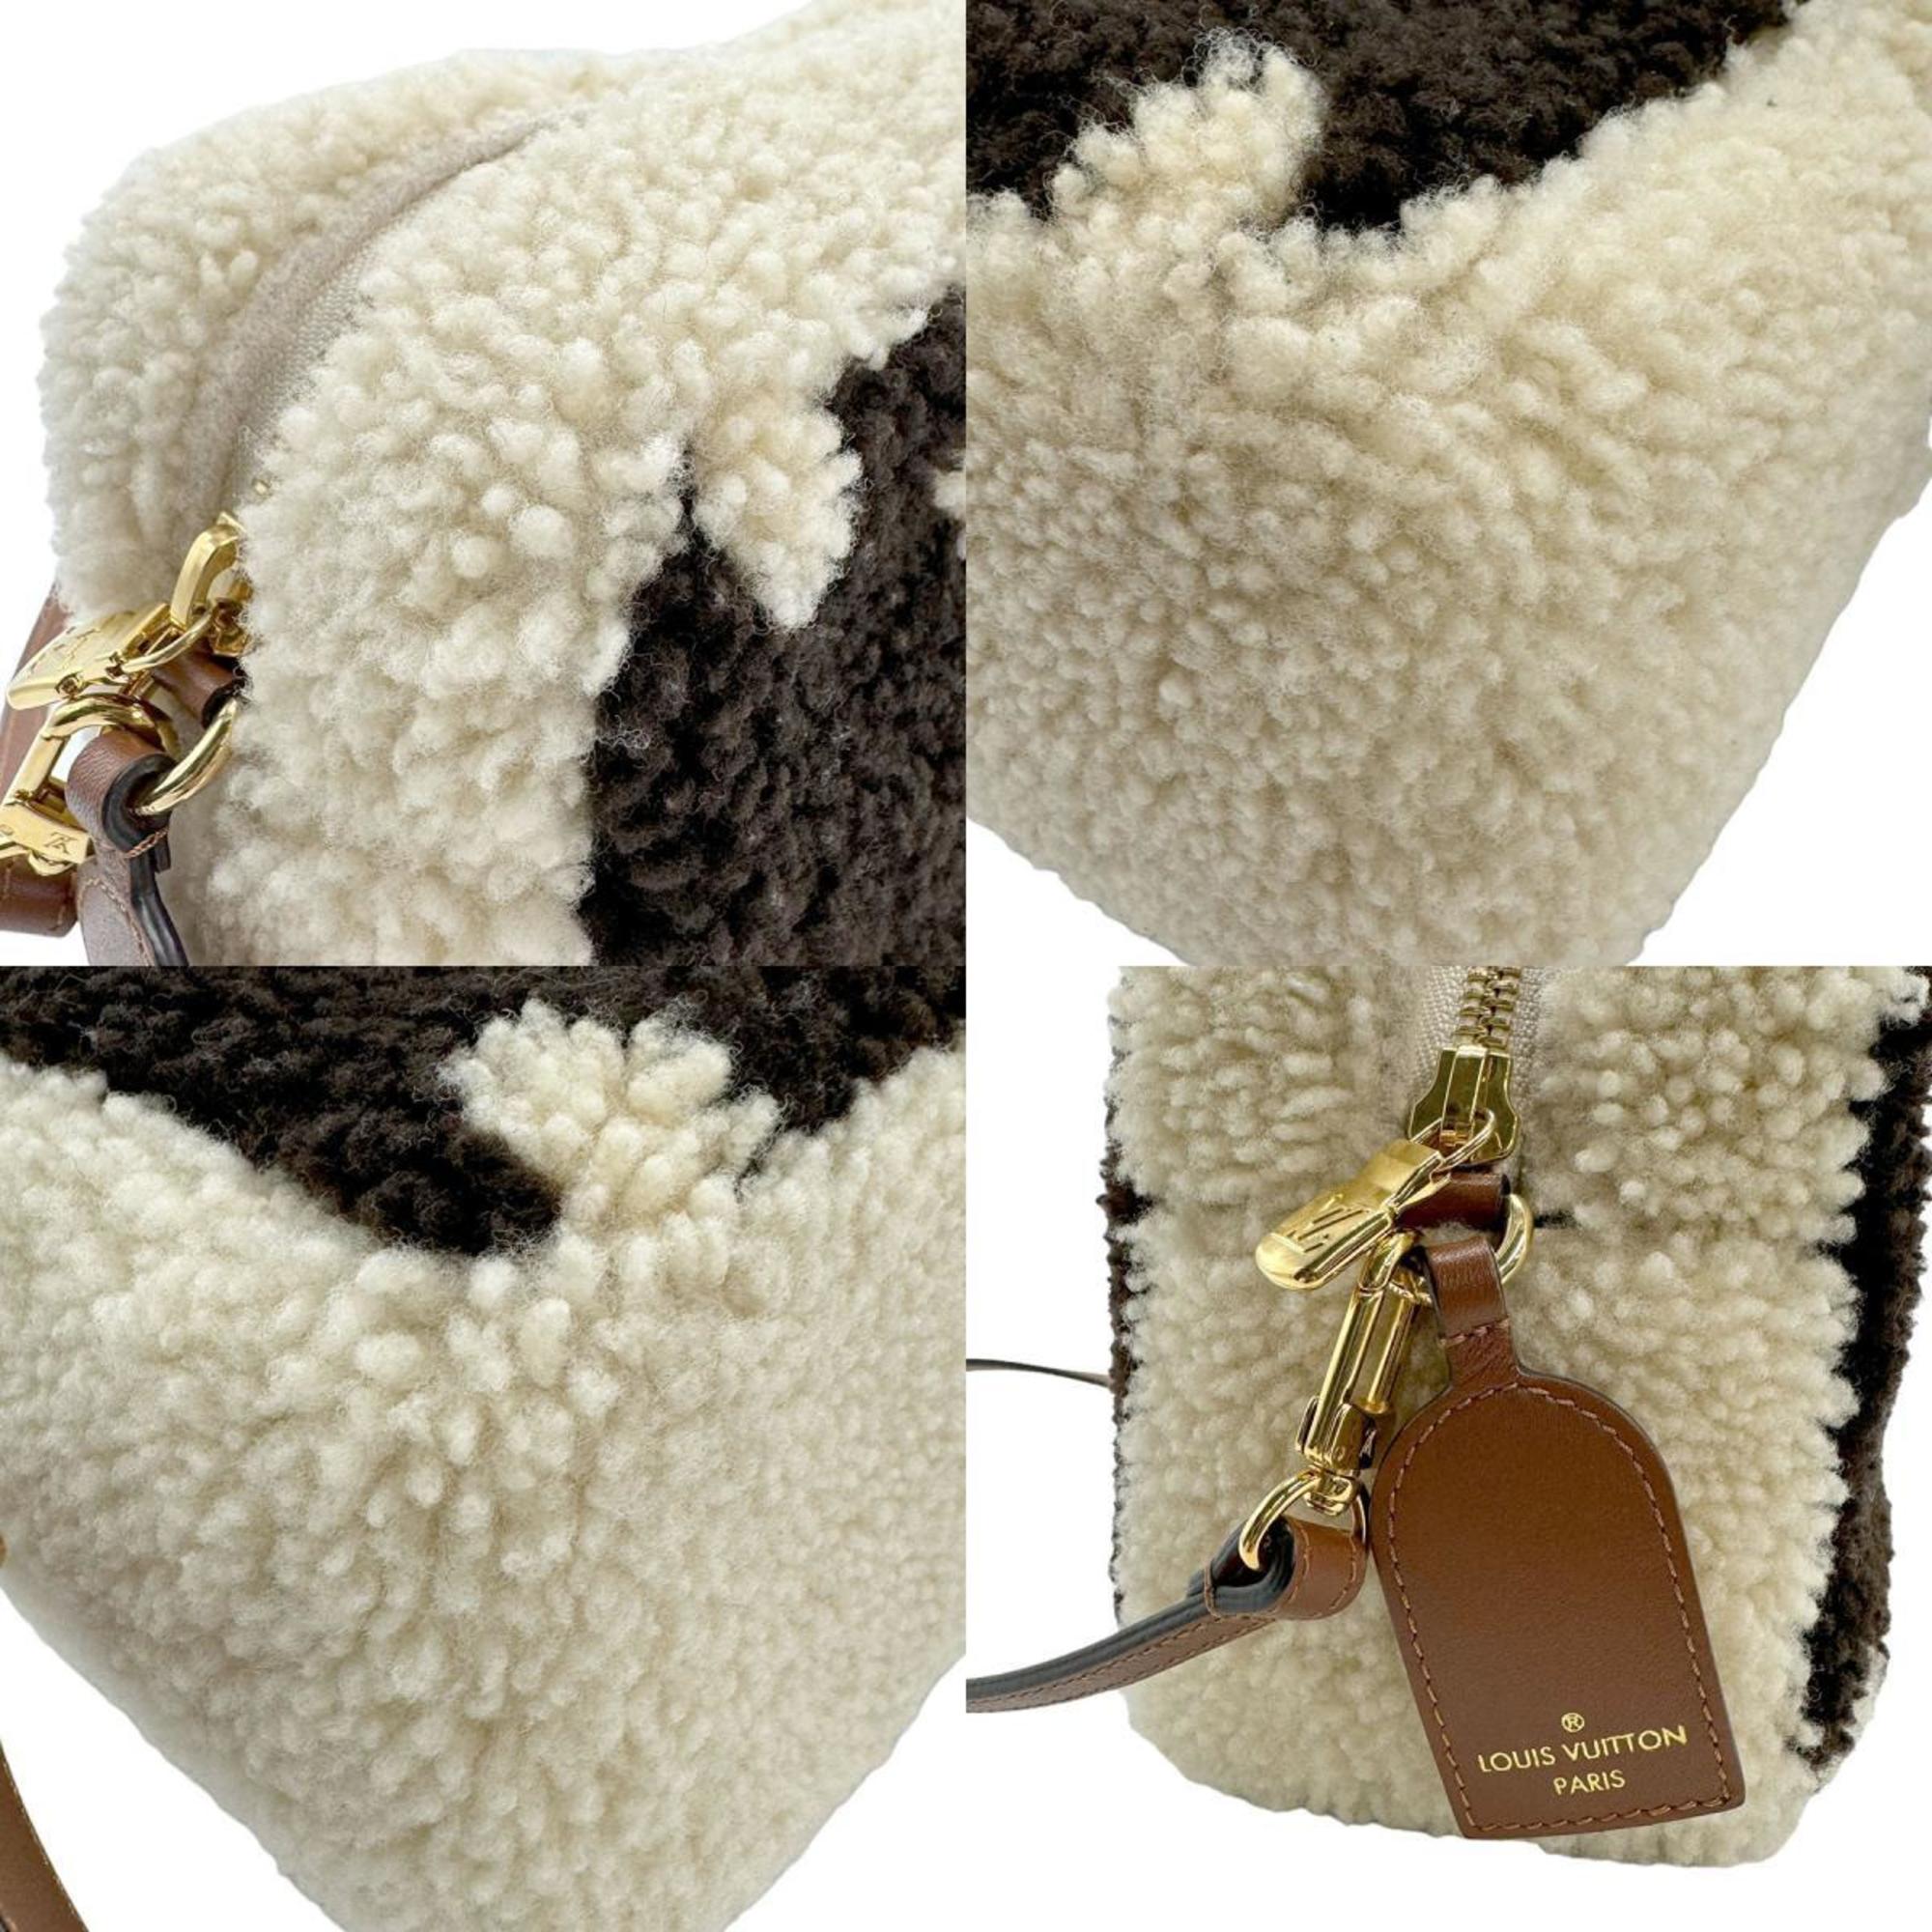 Louis Vuitton LOUIS VUITTON Handbag Monogram Teddy Beach Pouch Boa Light Beige Brown Women's M68599 z1215